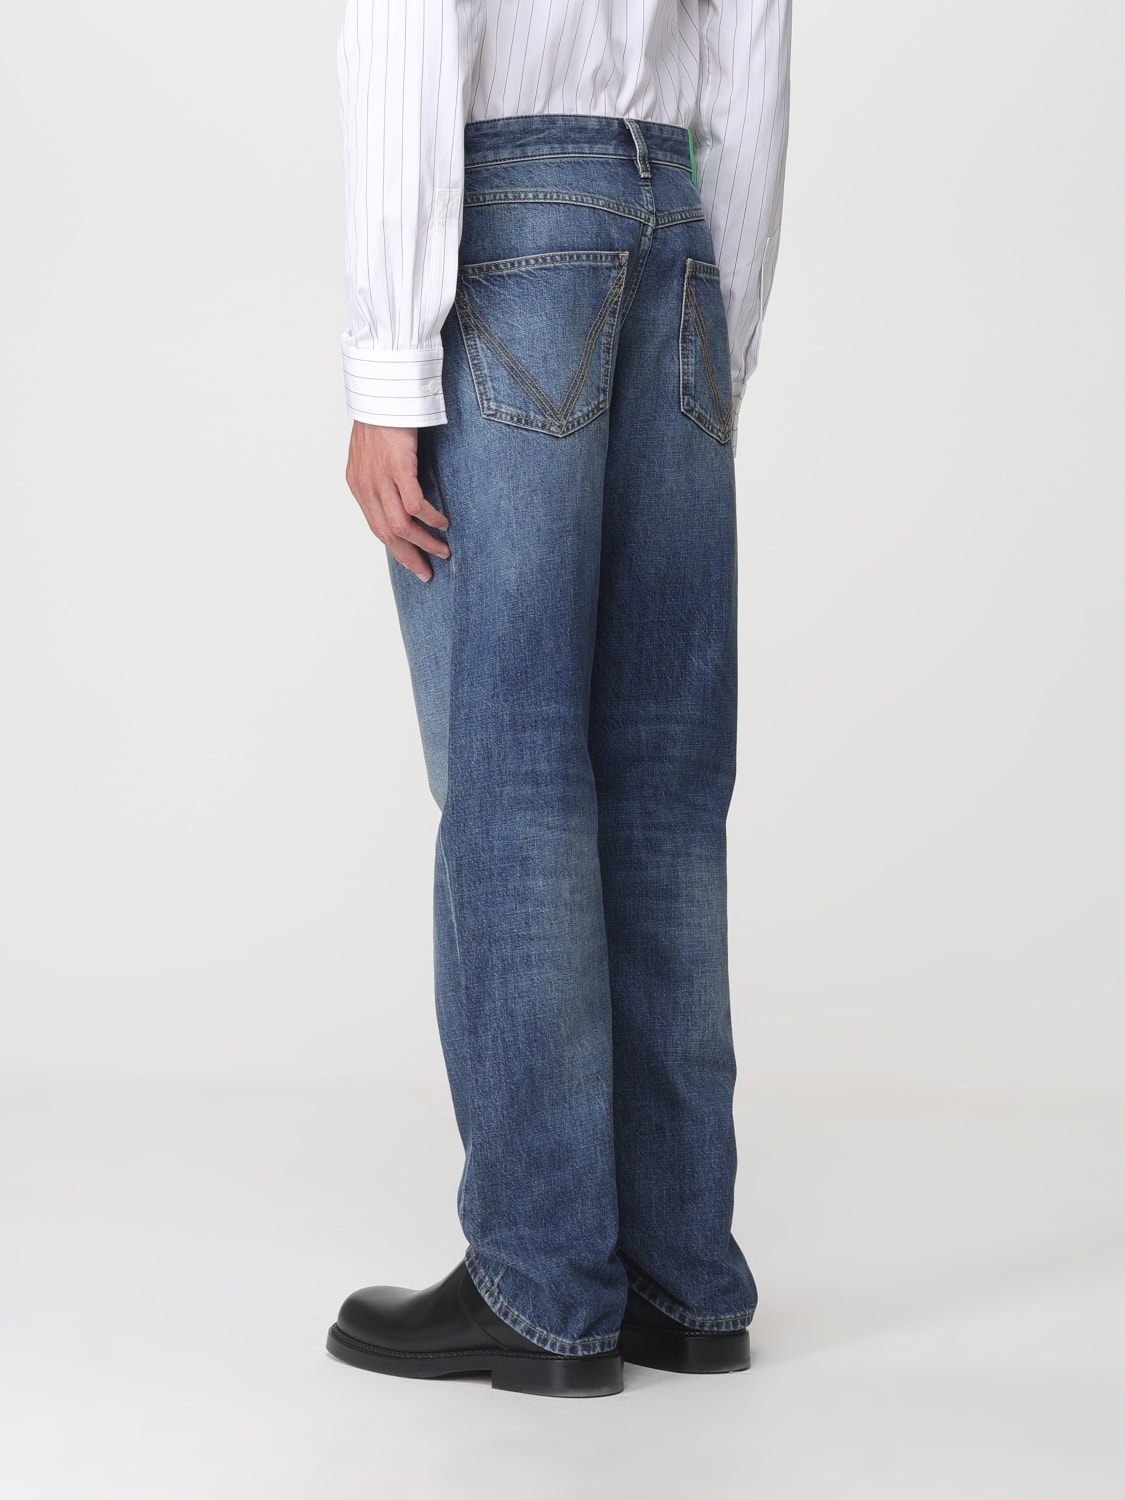 BOTTEGA VENETA: denim jeans - Blue | Bottega Veneta jeans 710238V2EN0 ...